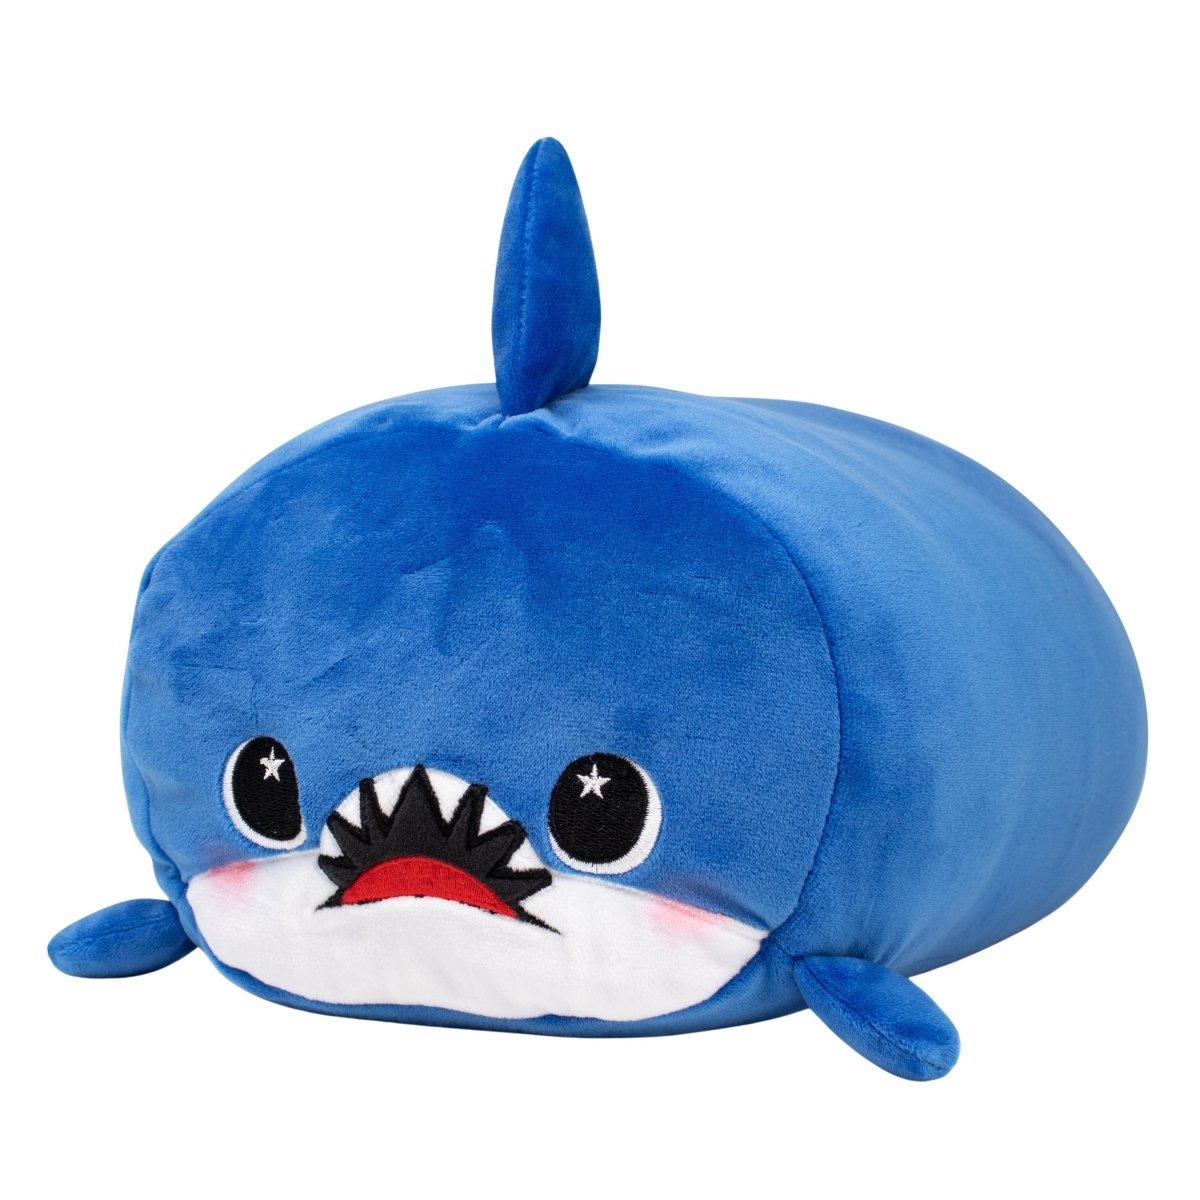 Azul the Shark Plushie